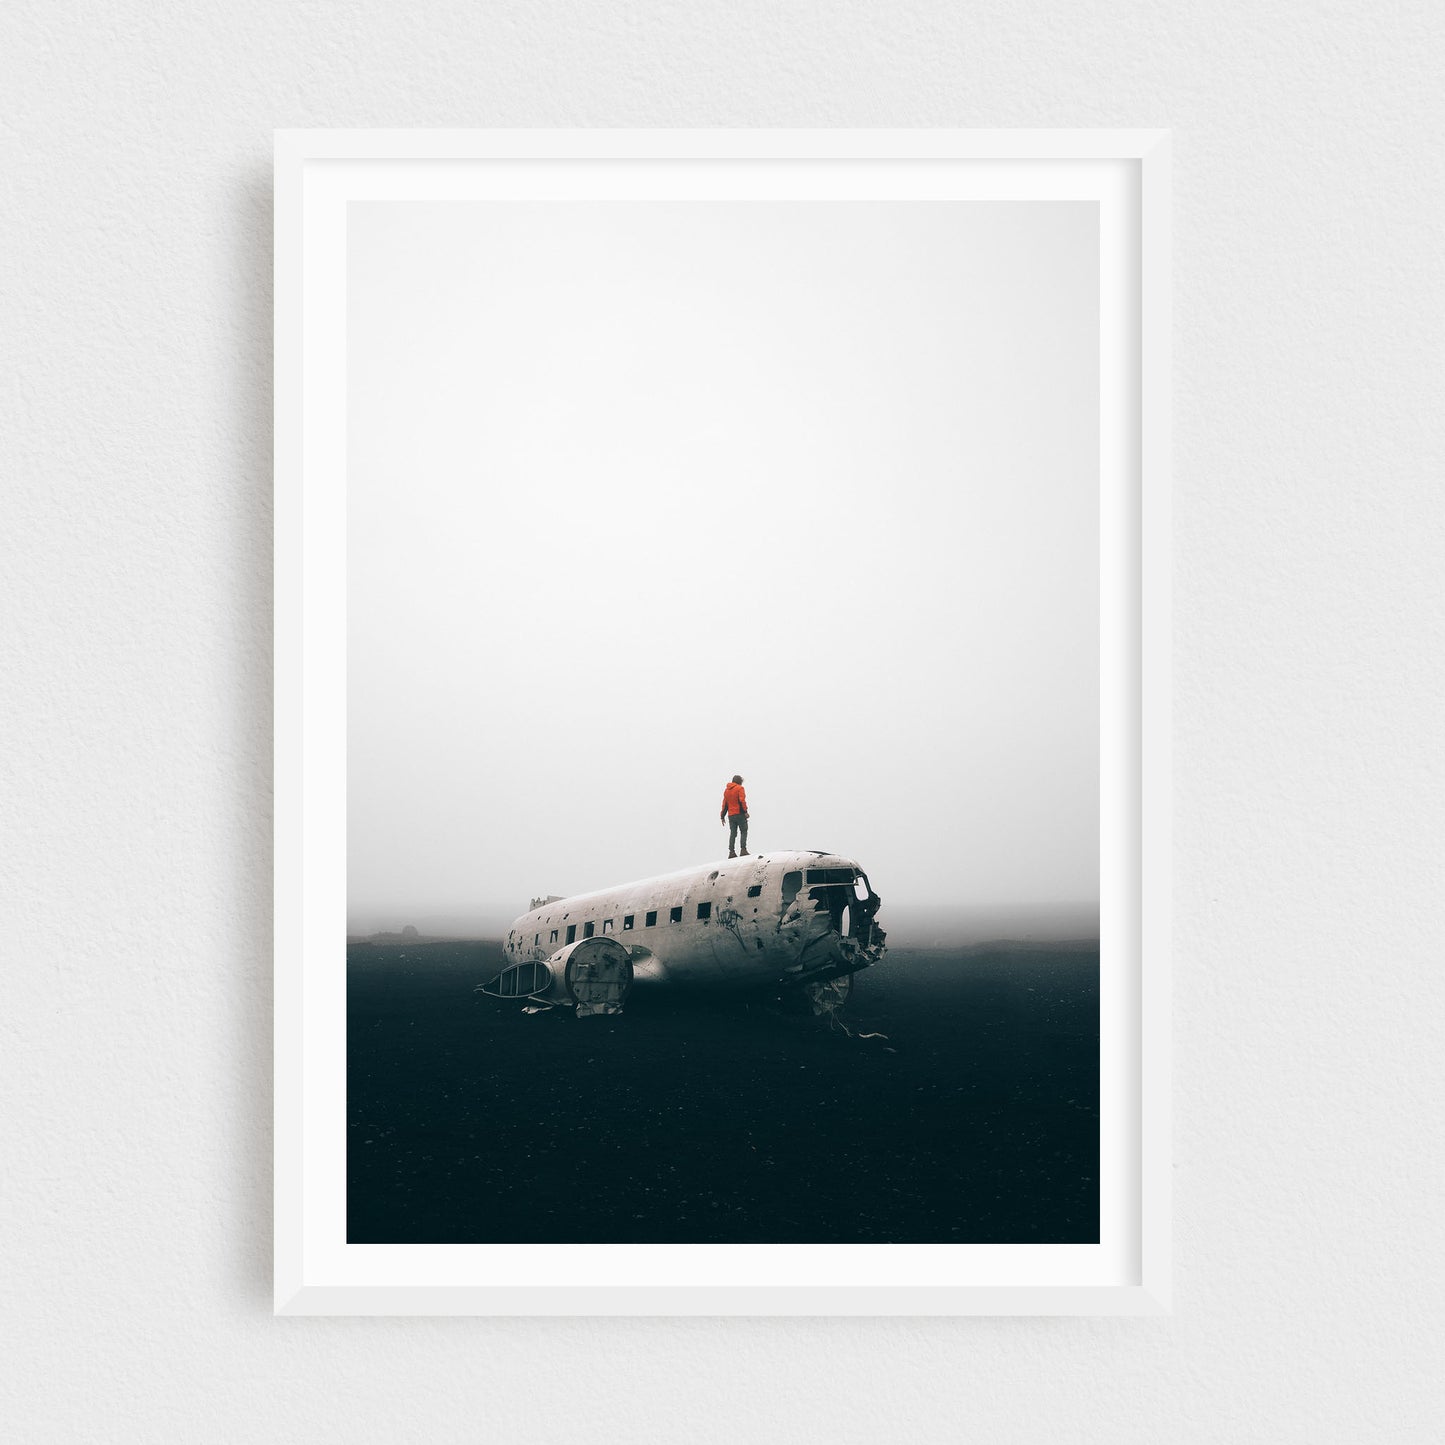 Iceland fine art photography print featuring DC3 plane crash at Solheimasandur, in a white frame